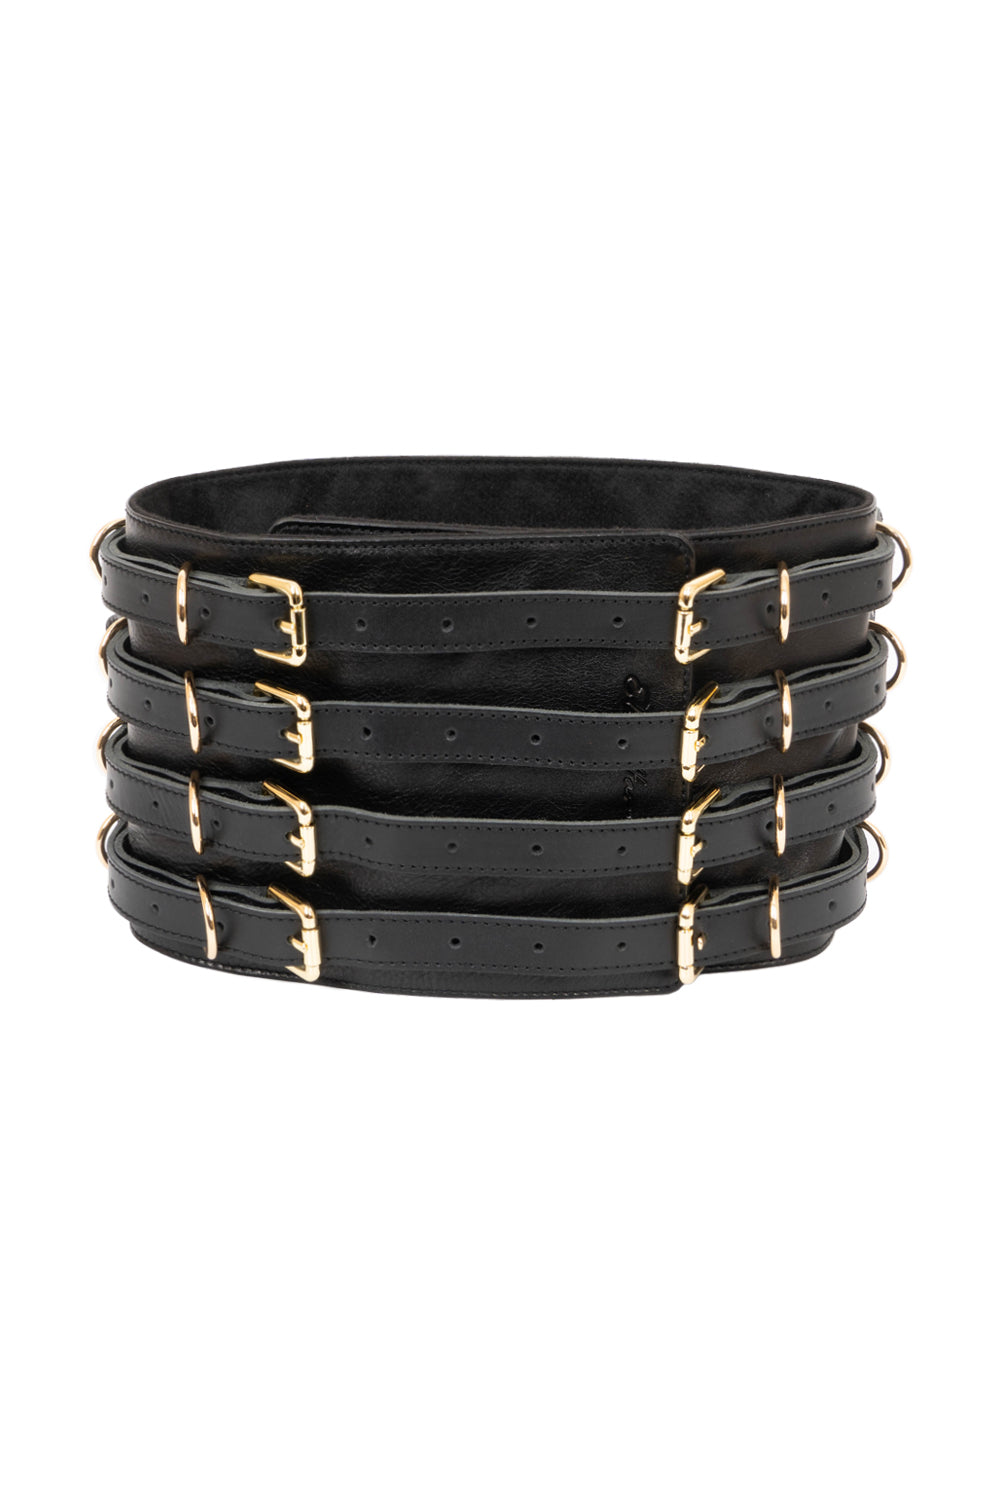 Wide waist belt with 4 adjustable straps. Black